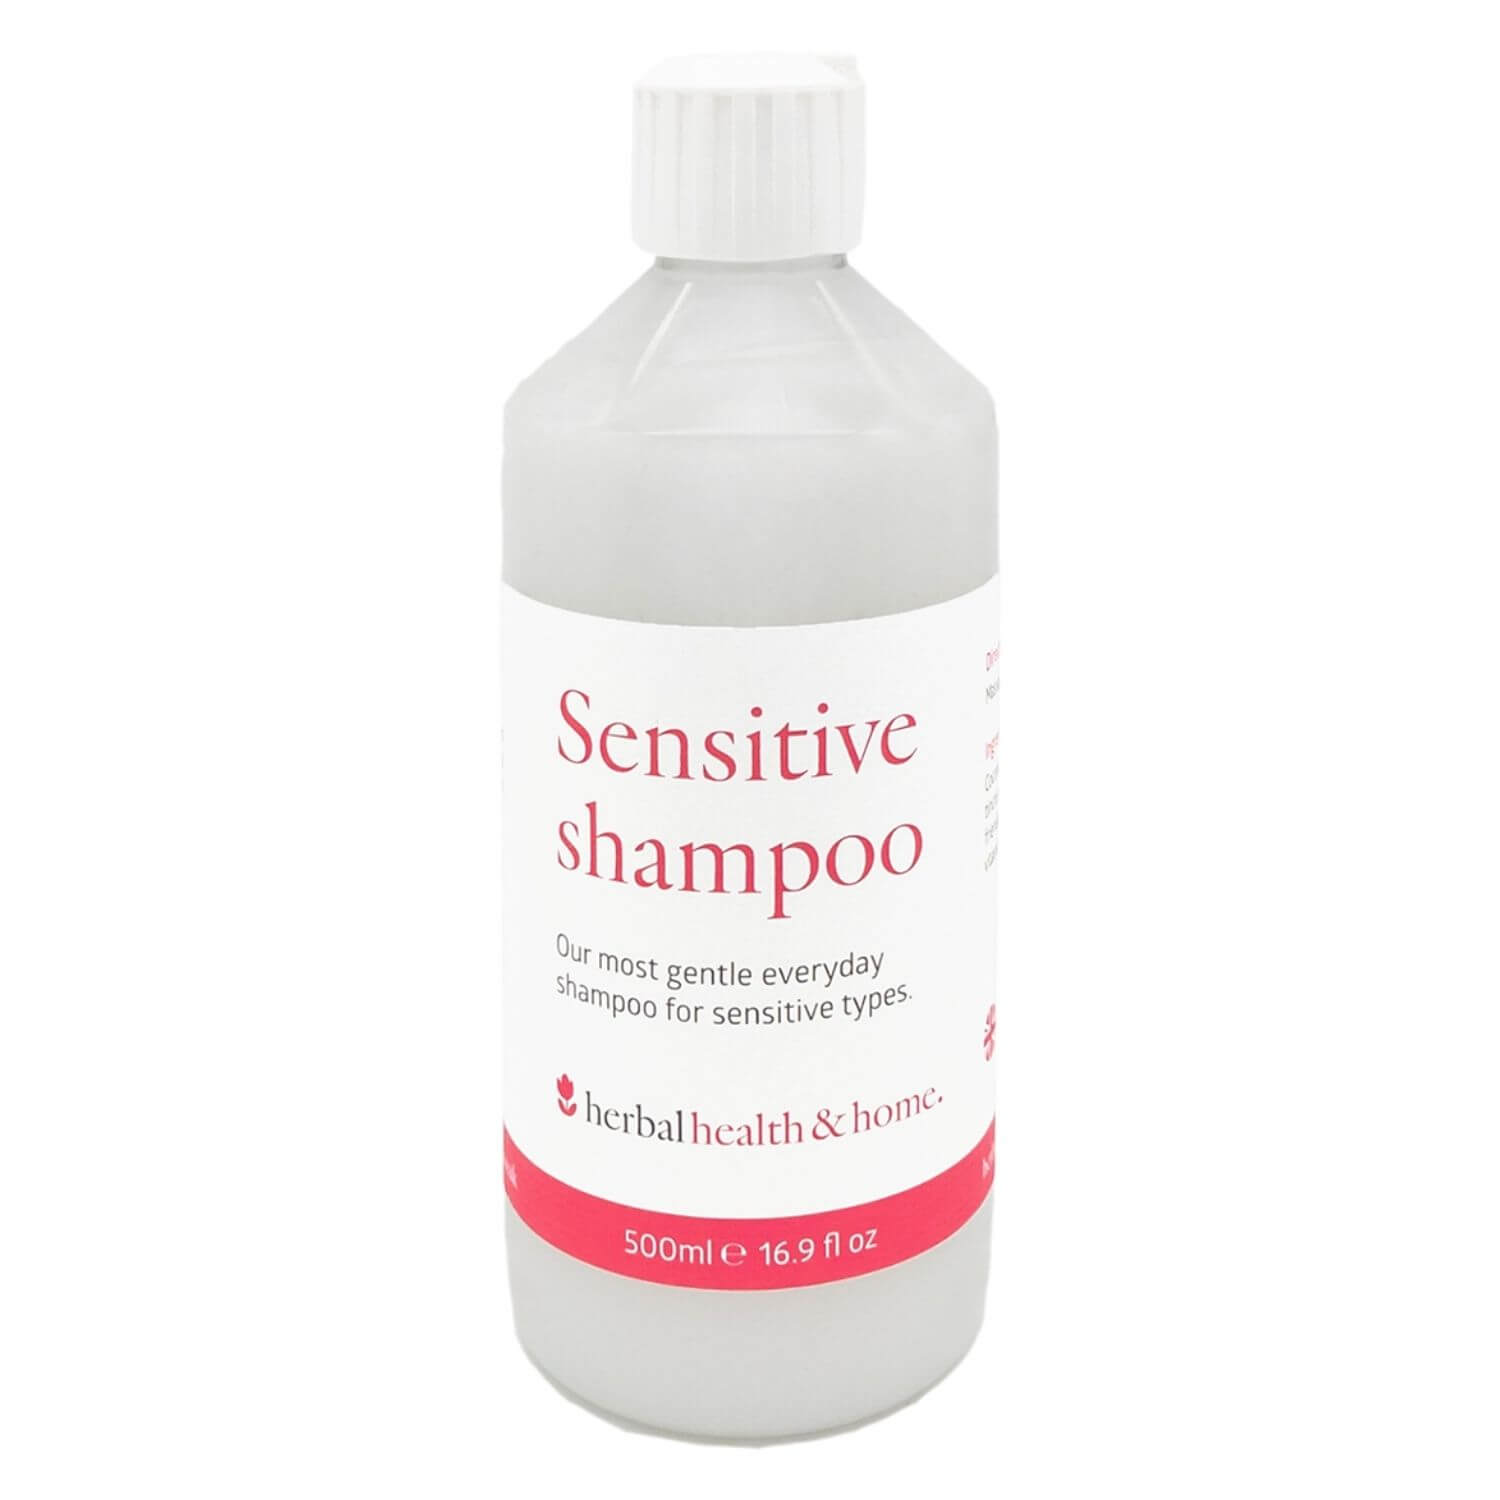 Sensitive Shampoo | Herbal, Health & Home